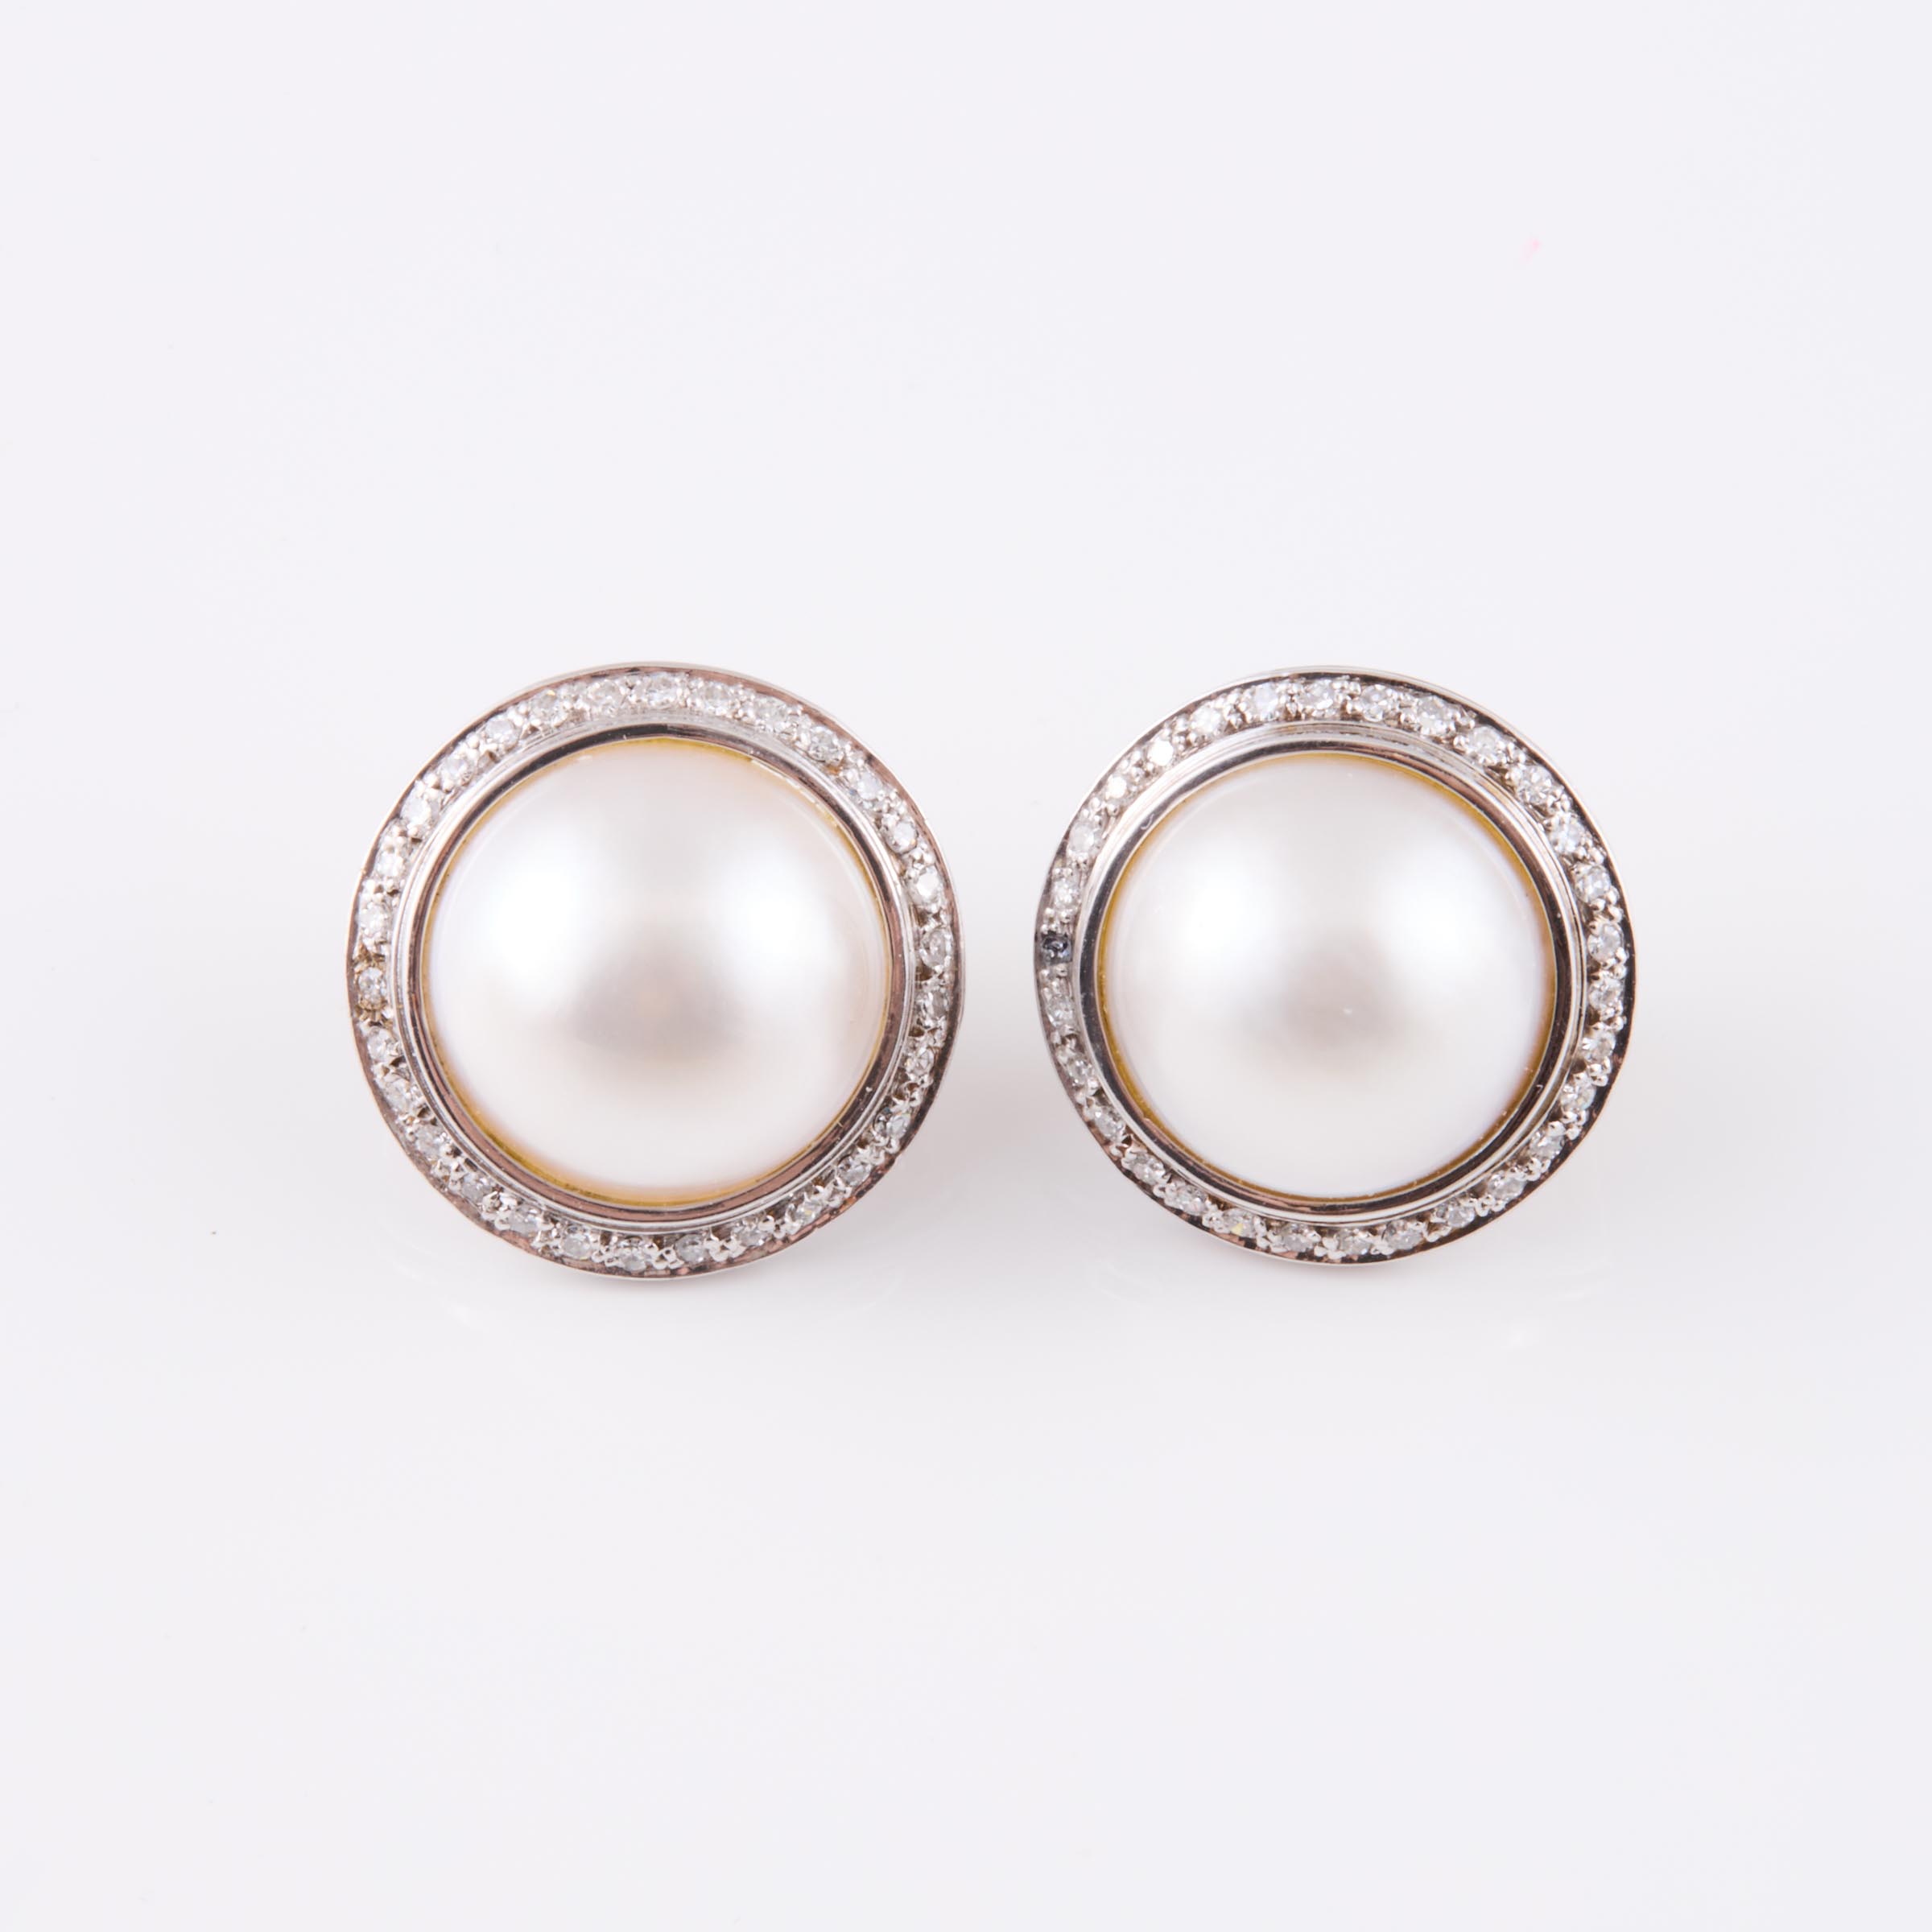 Pair Of 14k White Gold Button Earrings